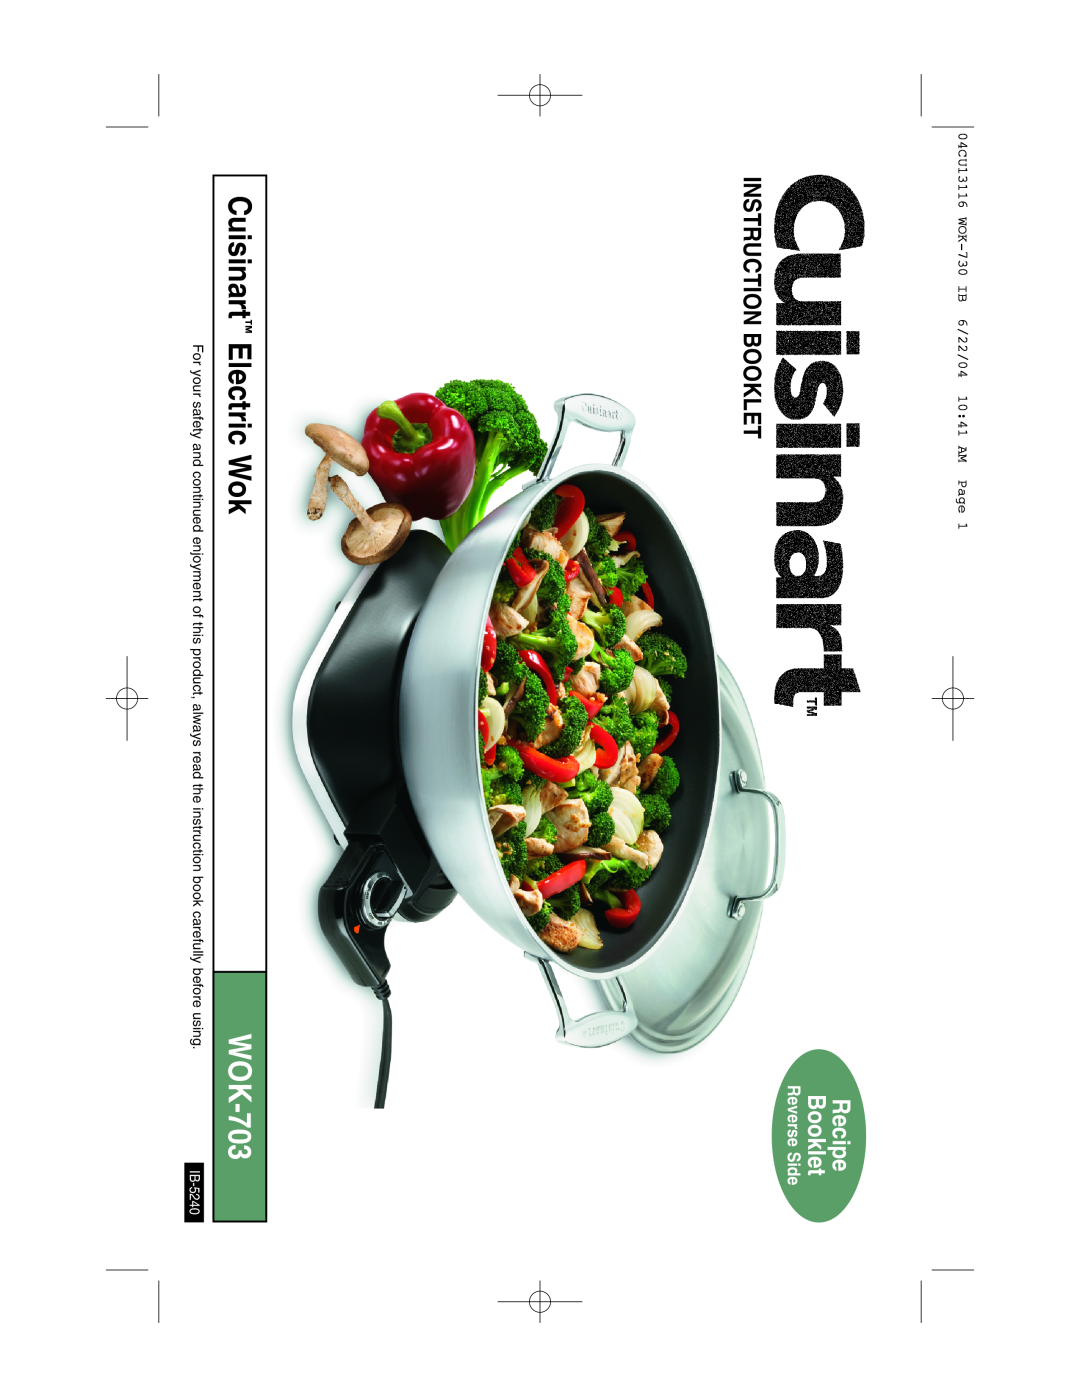 Cuisinart manual Instruction Booklet, 04CU13116 WOK-730 IB 6/22/04 1041 AM Page, Cuisinart Electric Wok, WOK-703 